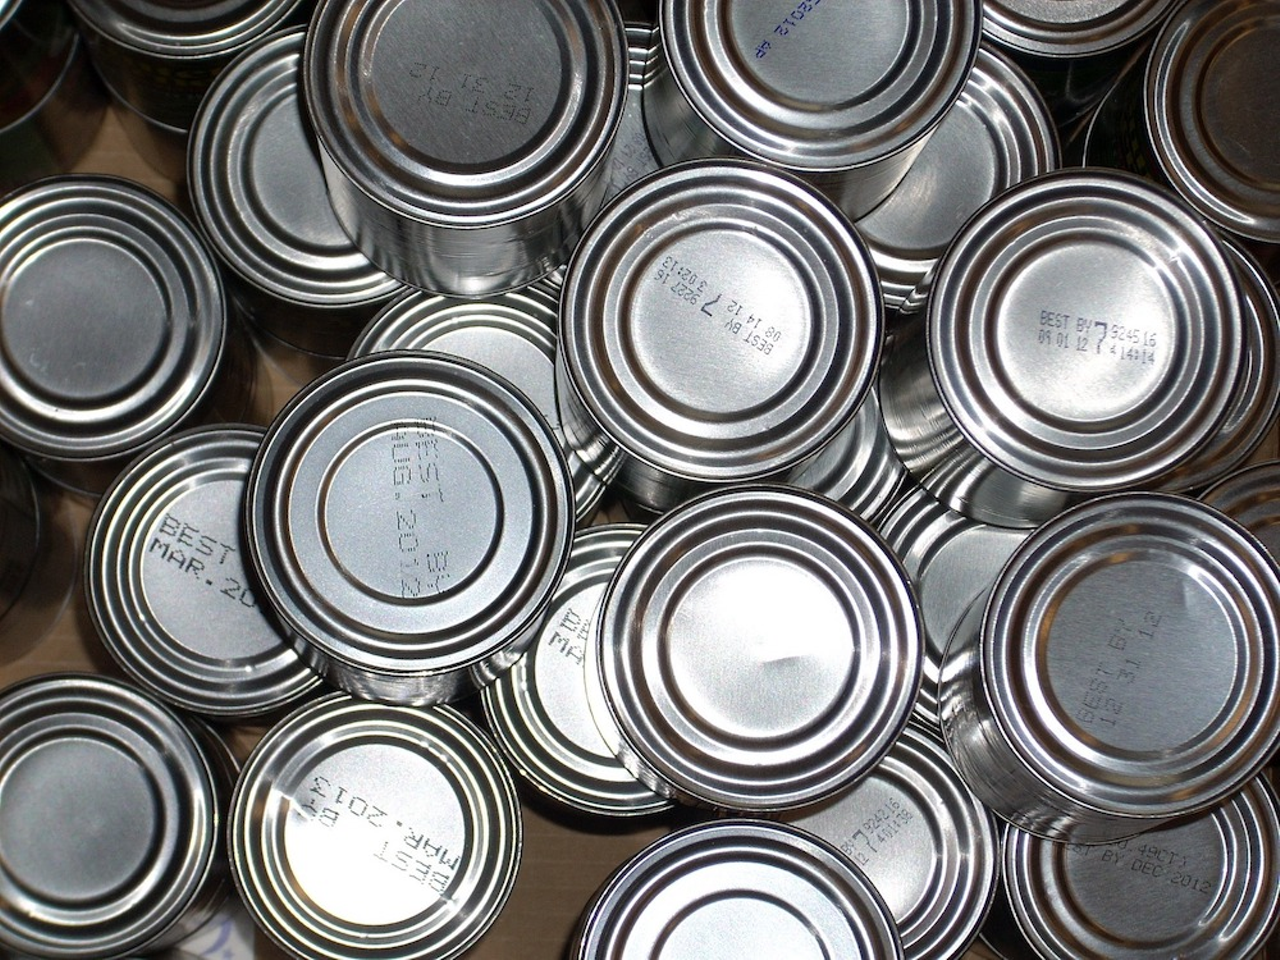 Sidewalk Sale + Canned Food Drive
Saturday, Nov. 10: 6:03-9:03 p.m.